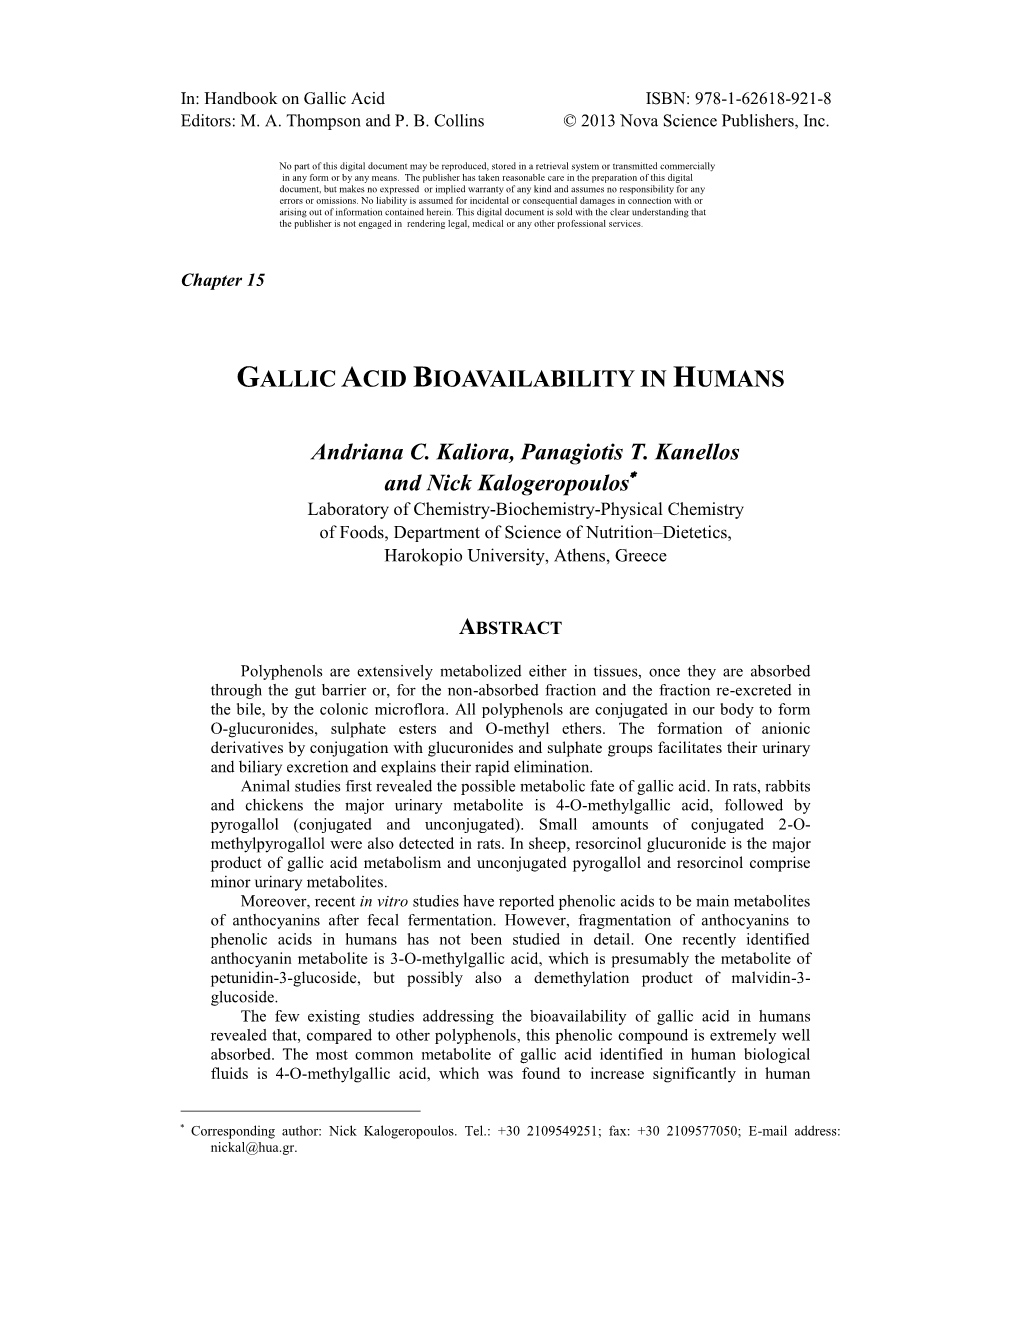 Gallic Acid Bioavailability in Humans